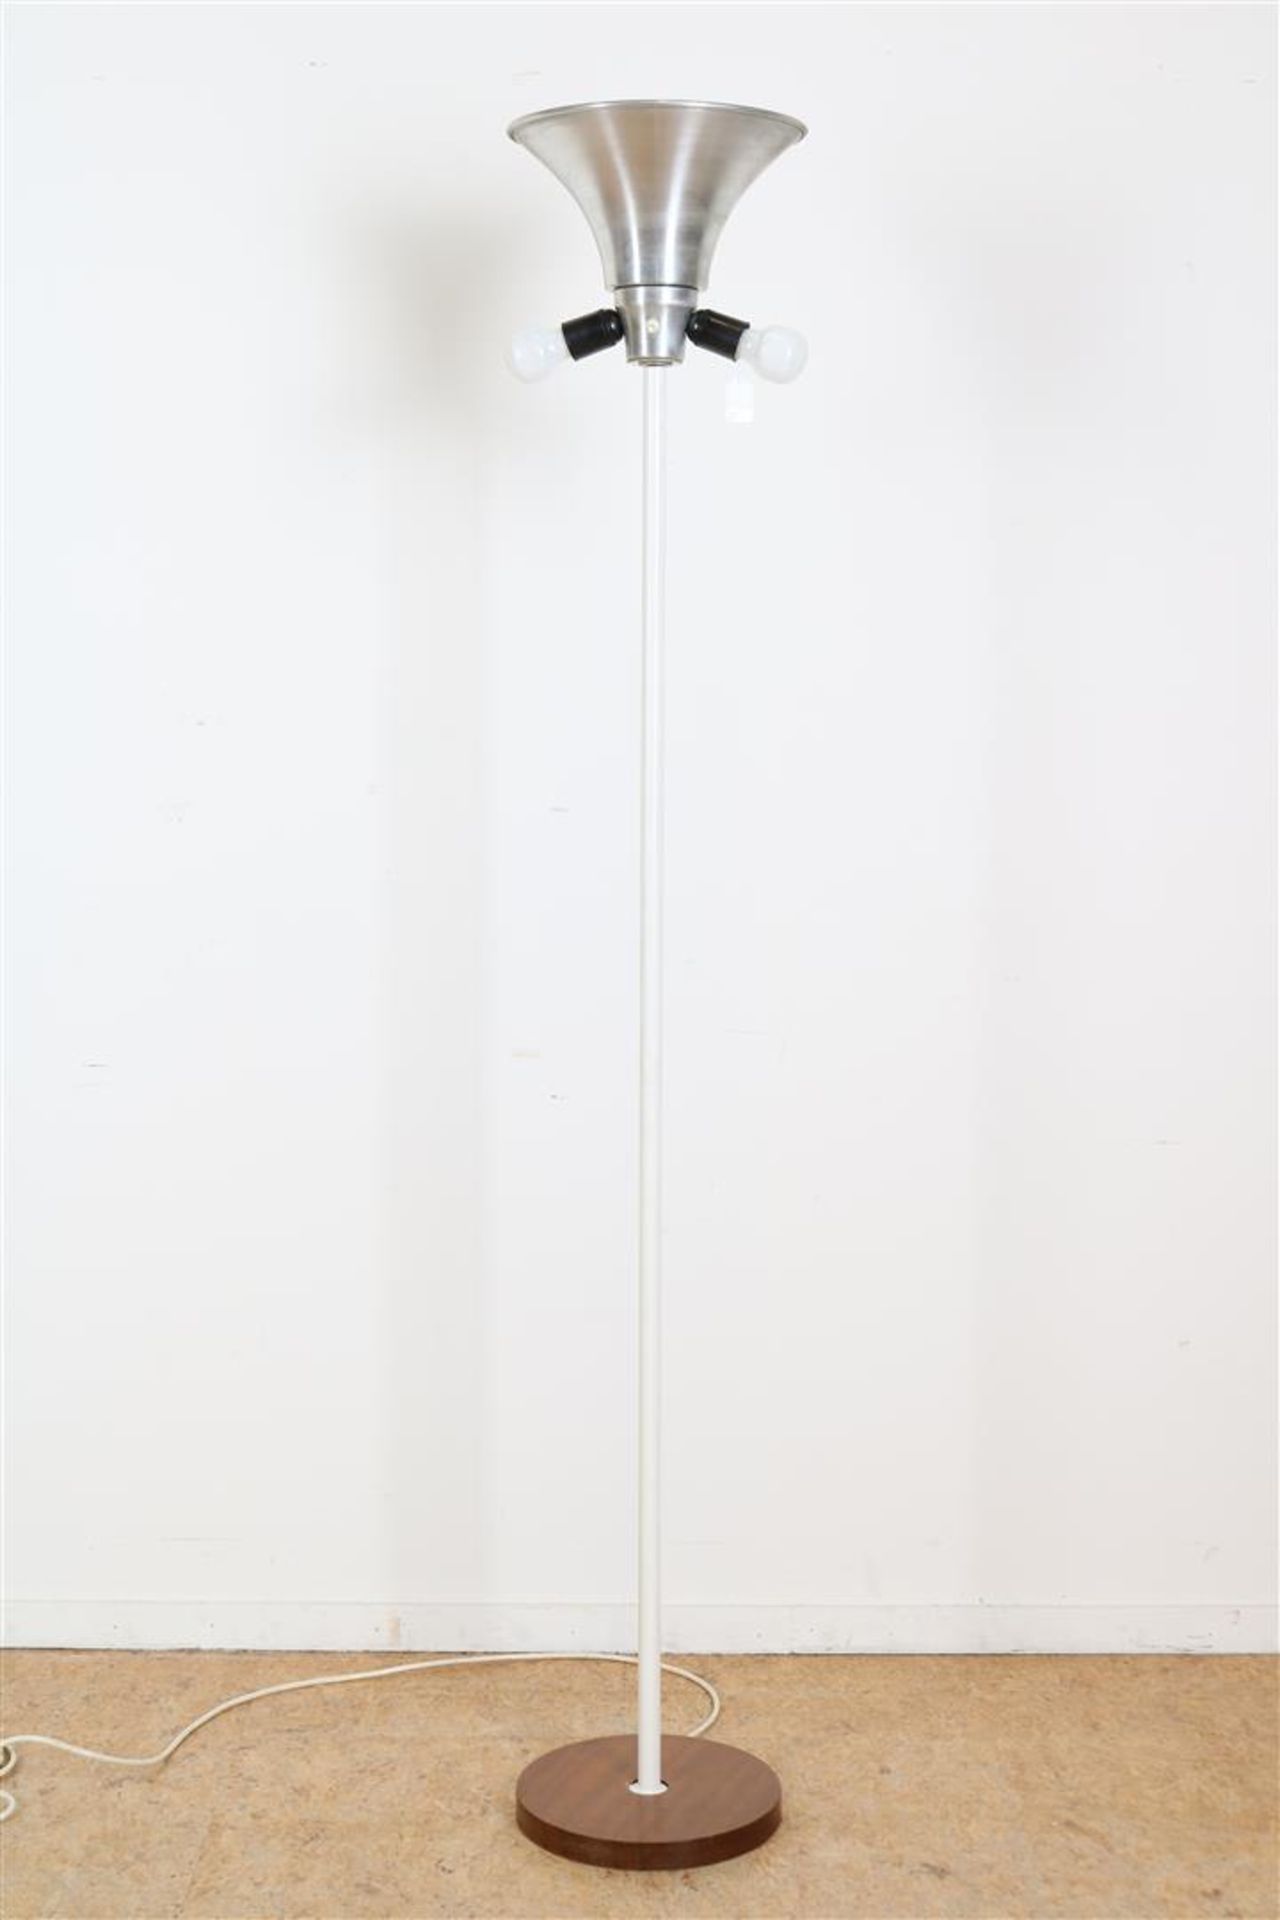 Gispen standing lamp on white-painted metal feet, aluminum shell shade, height 170 cm.